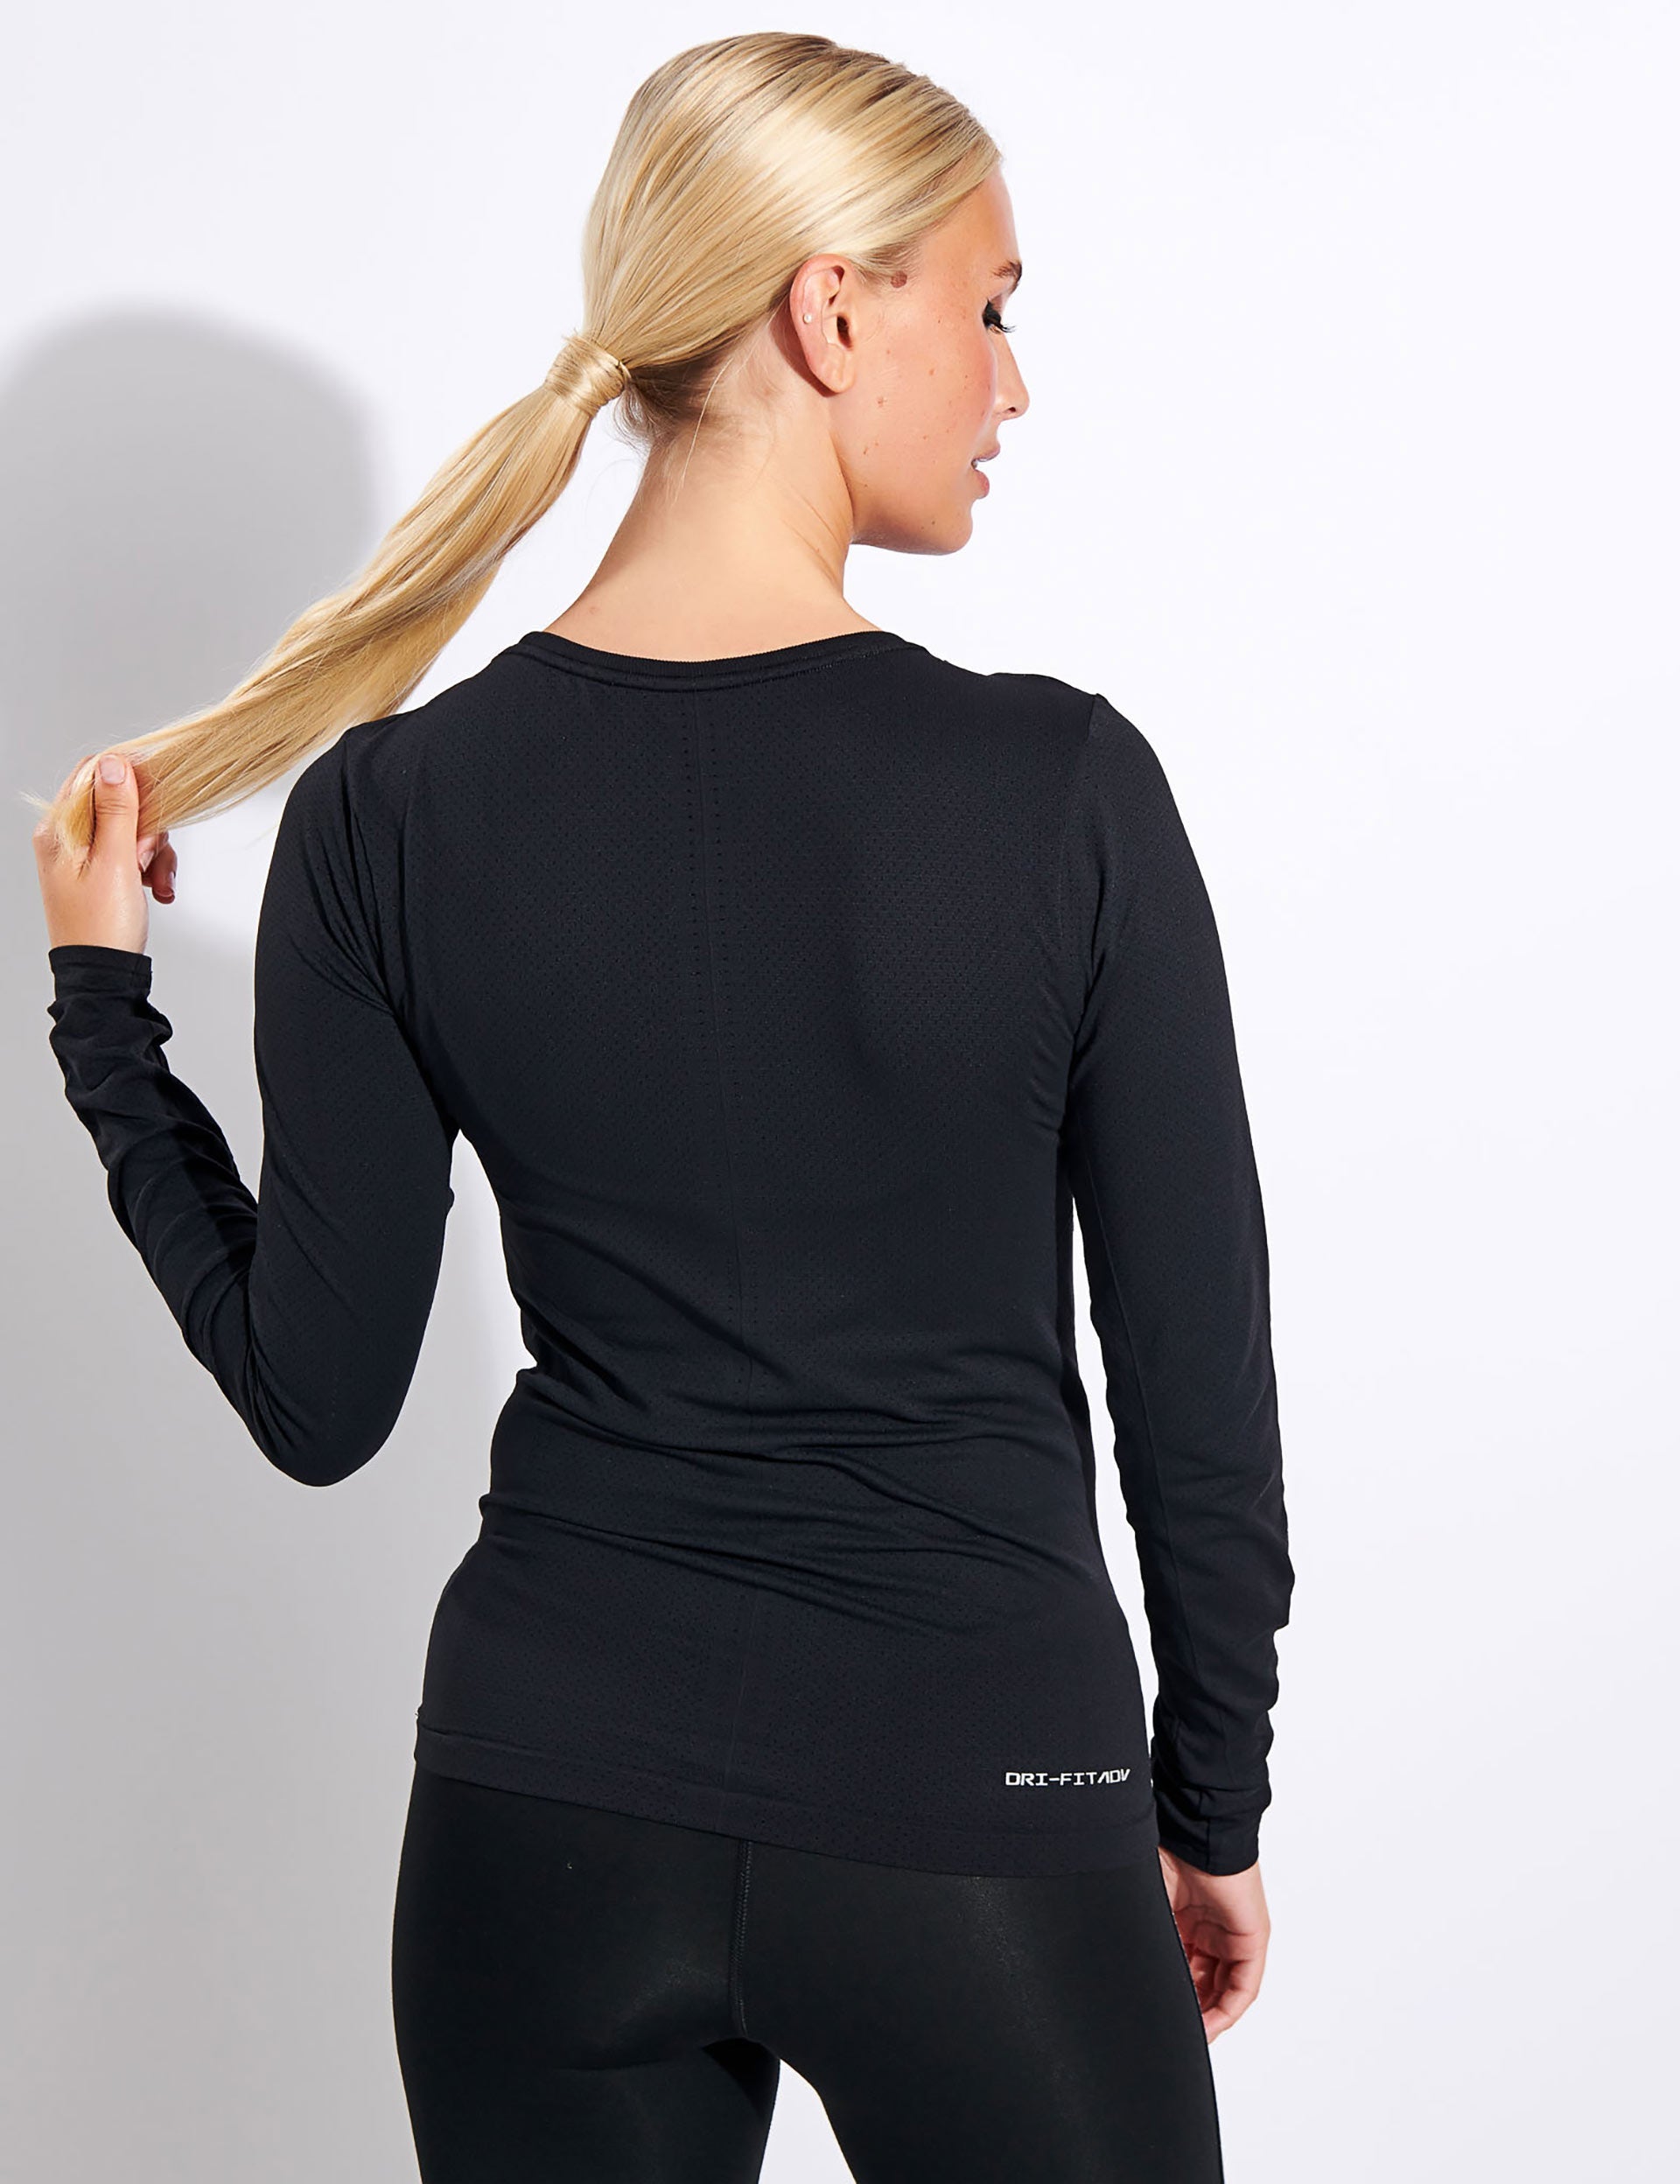 Nike Dri-FIT ADV Long Sleeve Top - Black/Reflective Silverimage3- The Sports Edit